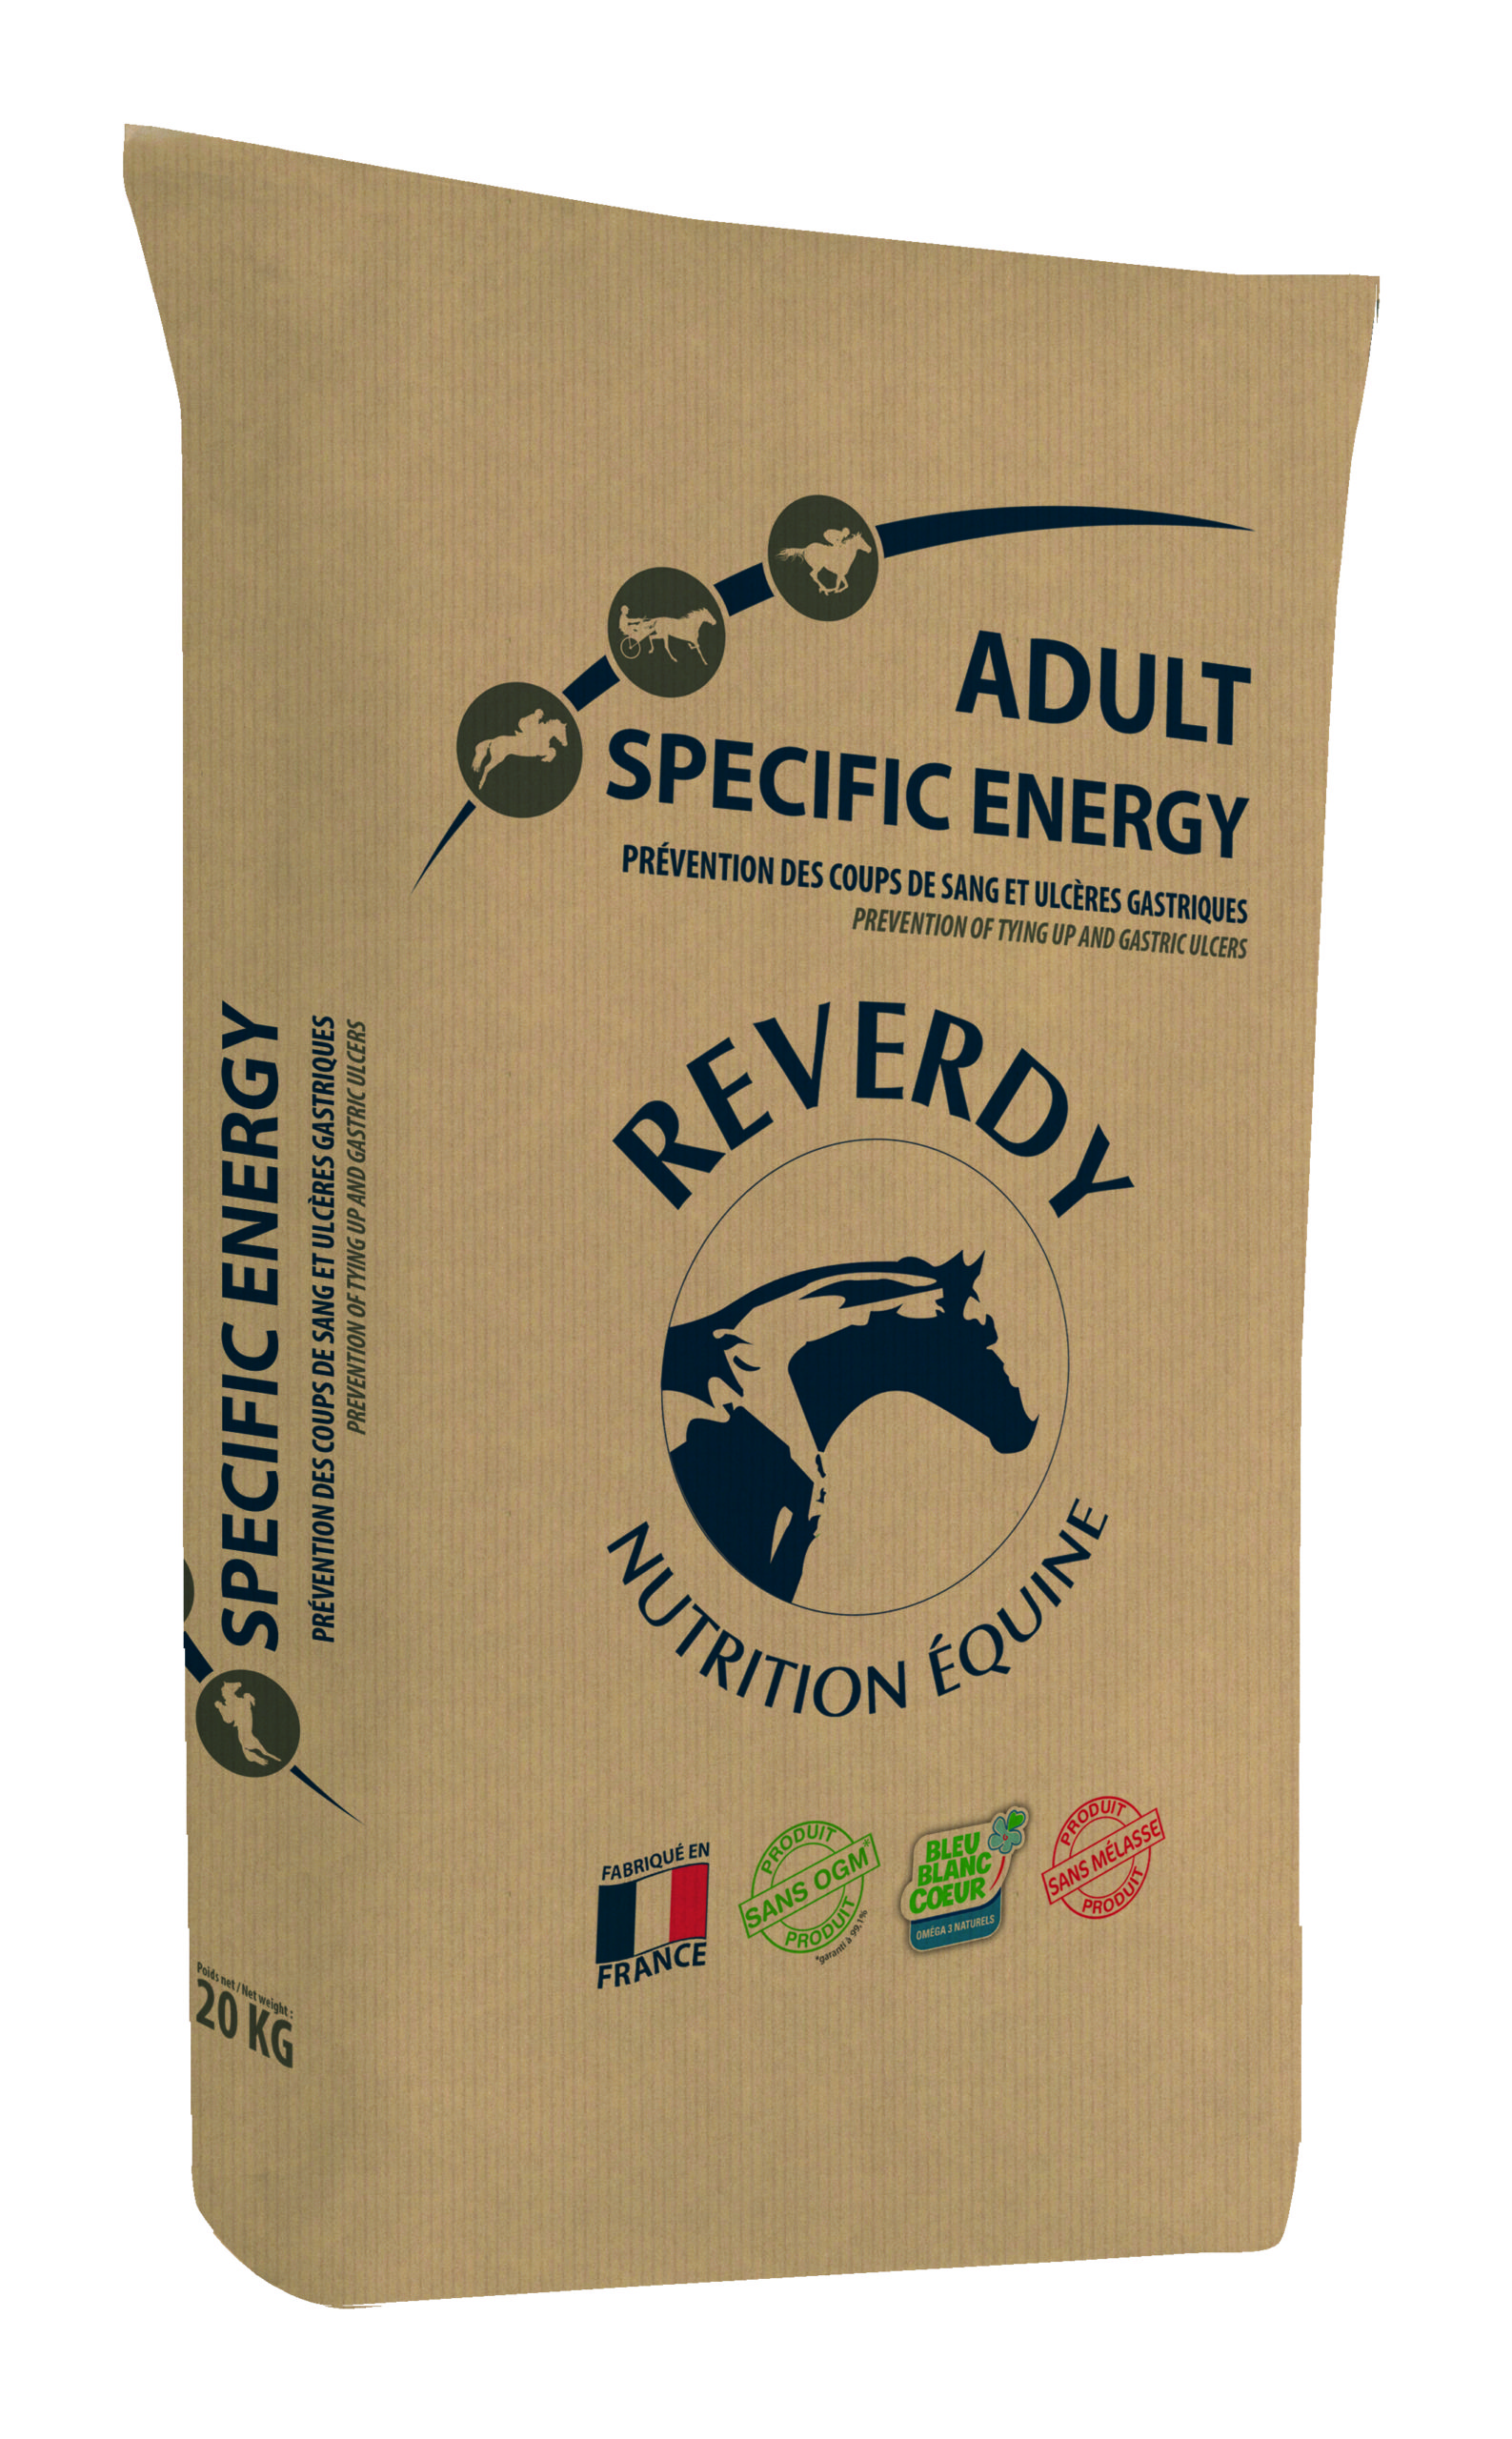 Reverdy-Adult-Specific-Energy